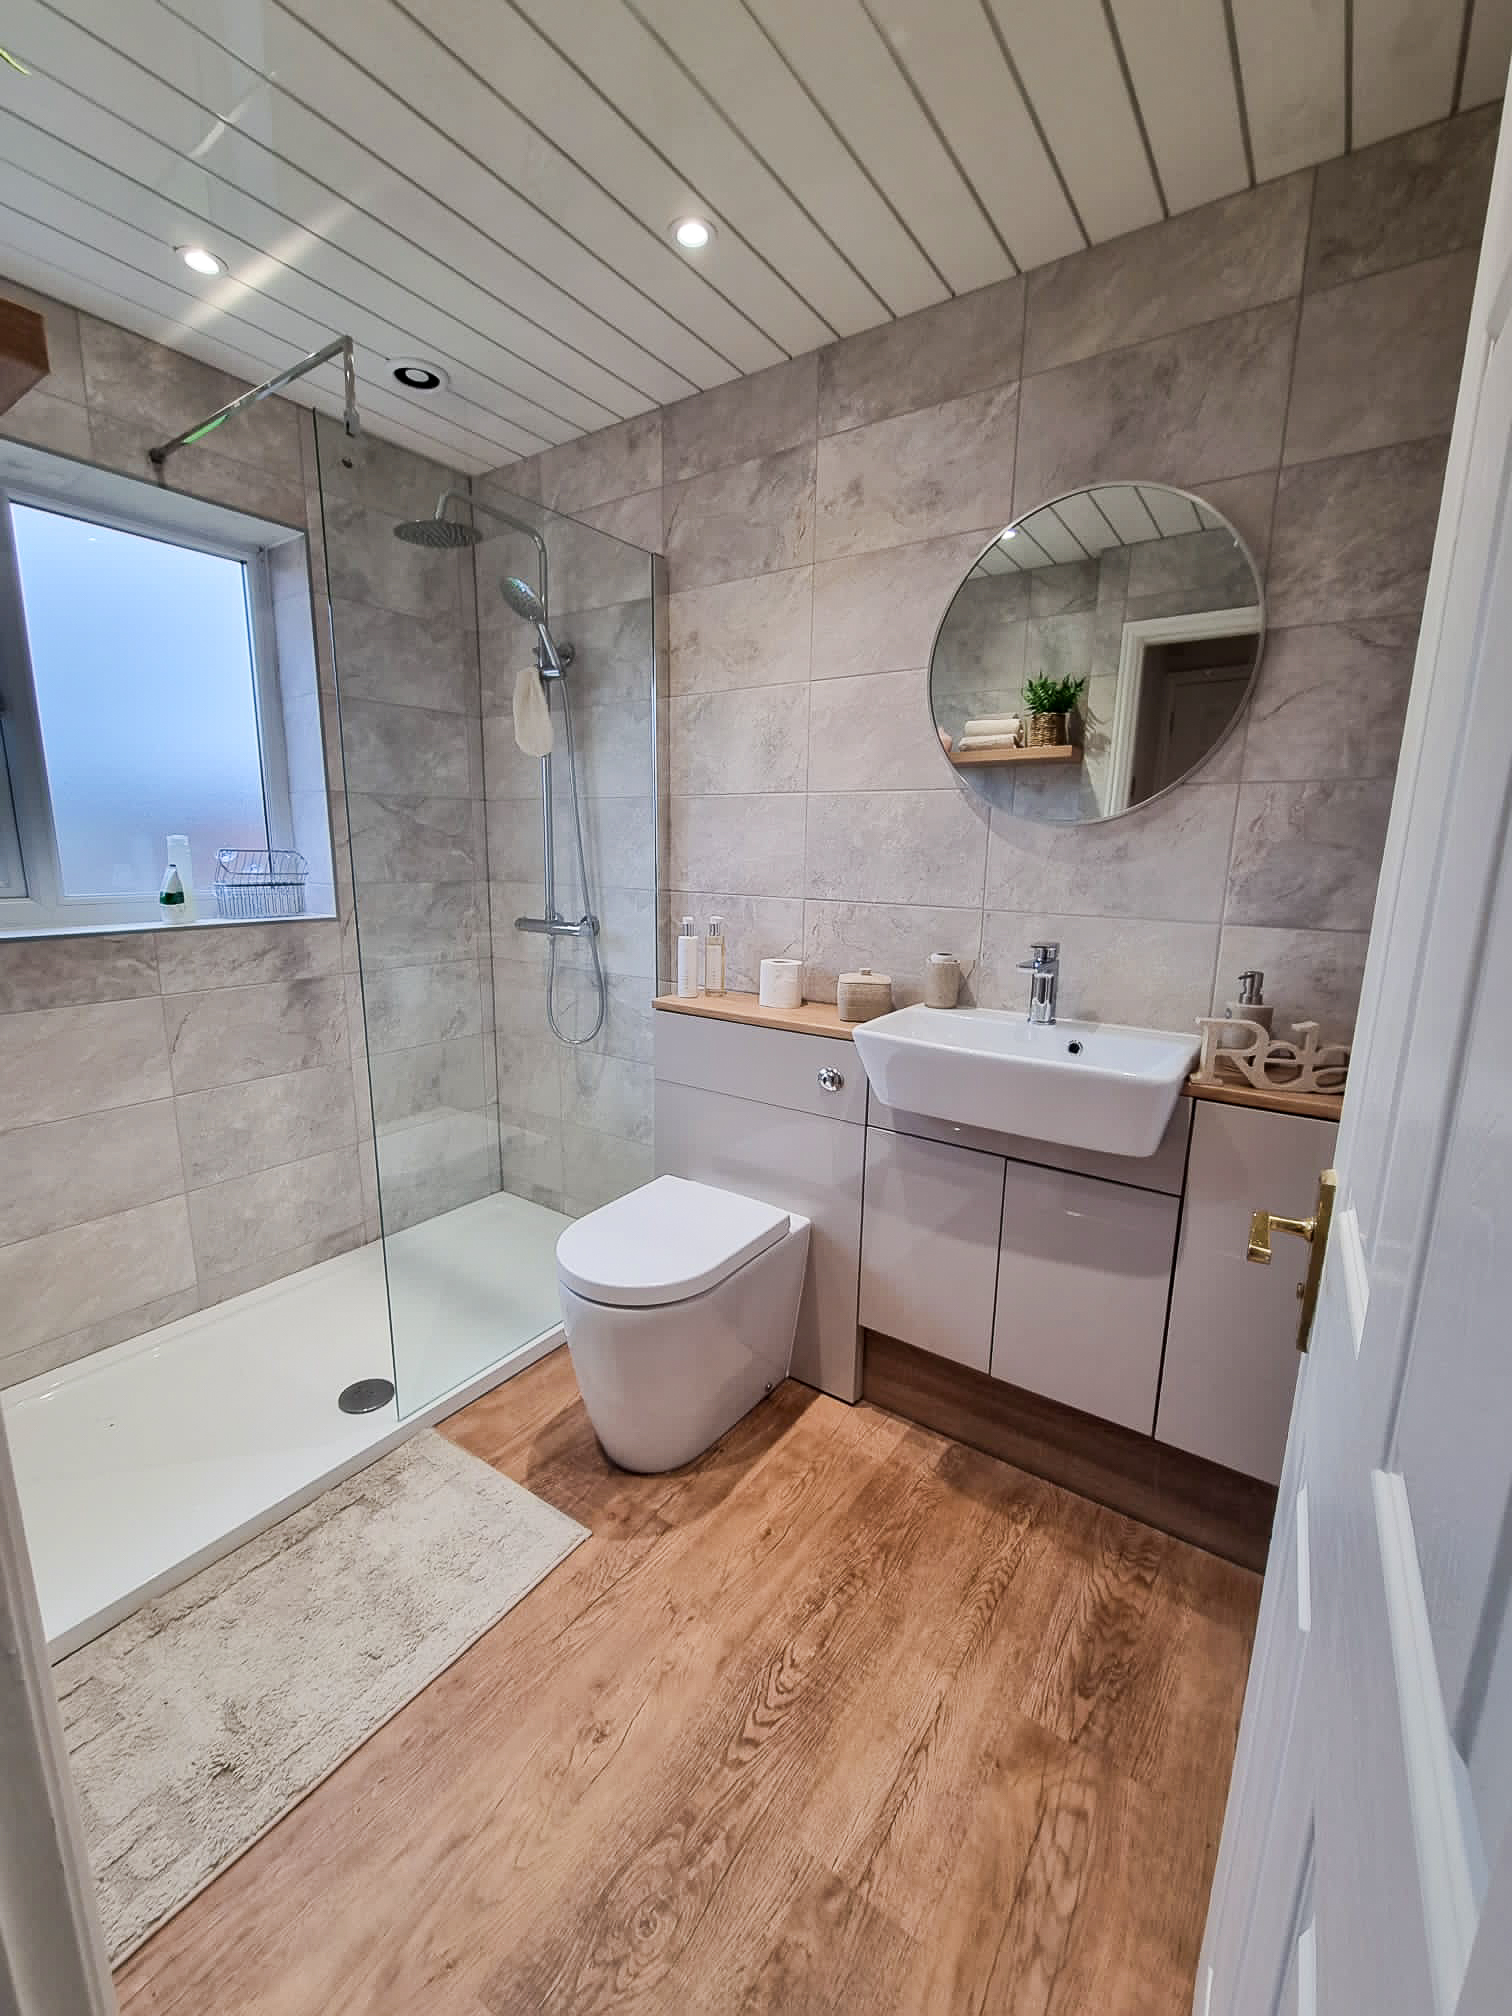 Flintshire and Cheshire bathroom installs